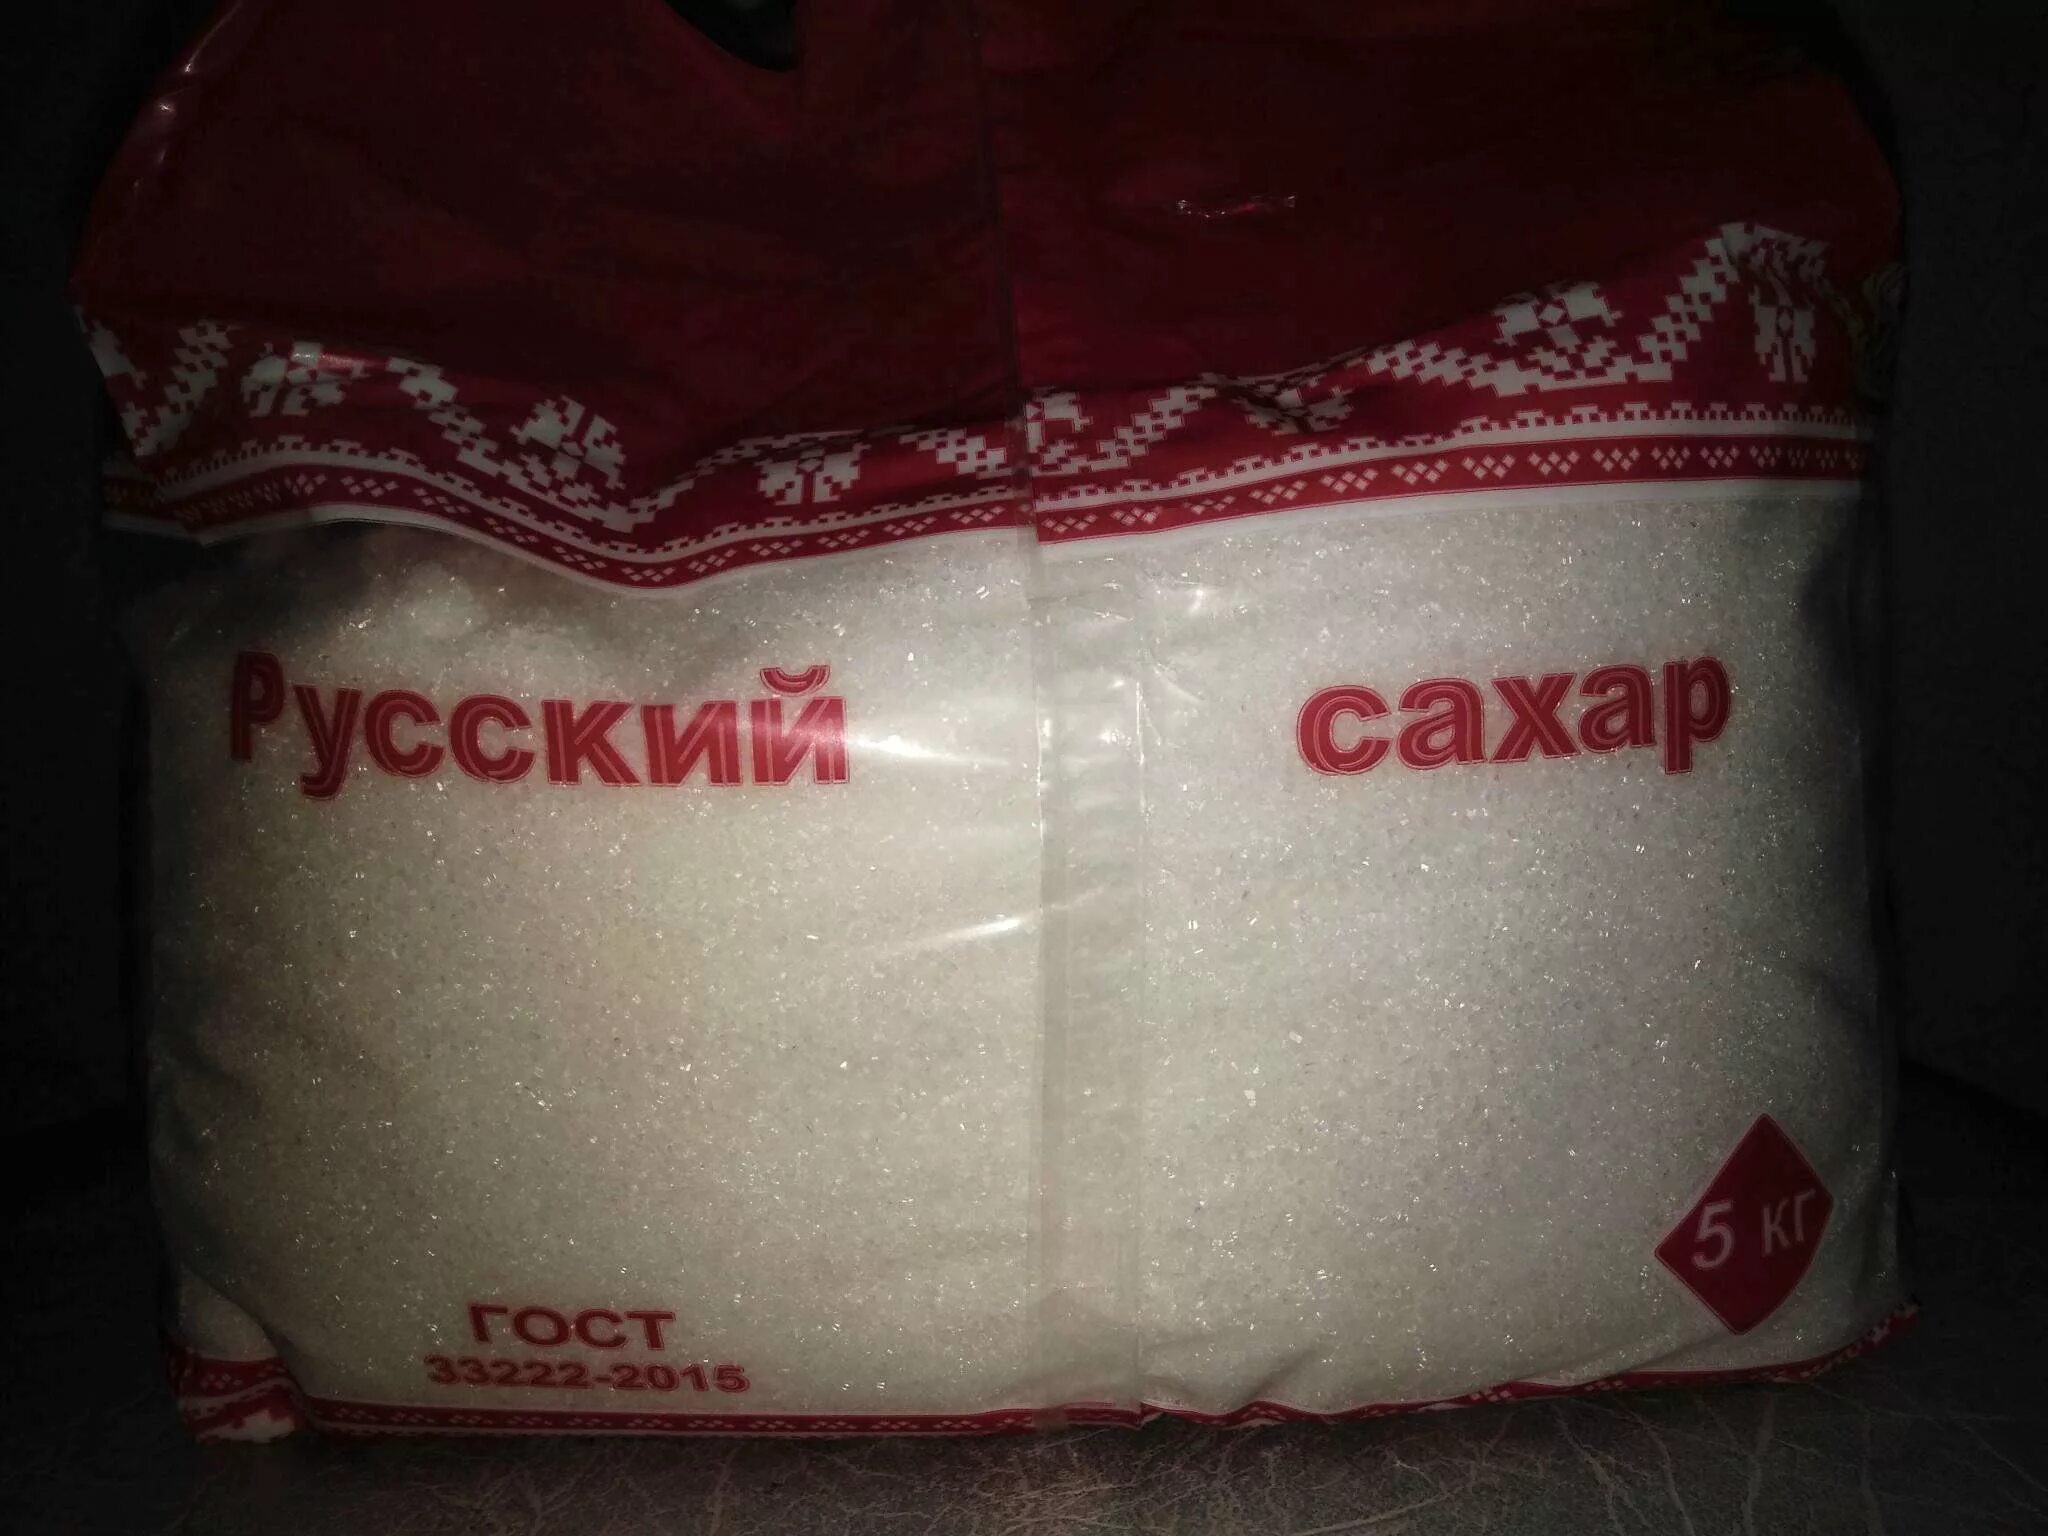 Сахар-песок русский сахар 5кг. Сахар песок русский 5кг. Сахар русский сахар 5 кг. Сахарный песок «русский сахар» 5 кг.